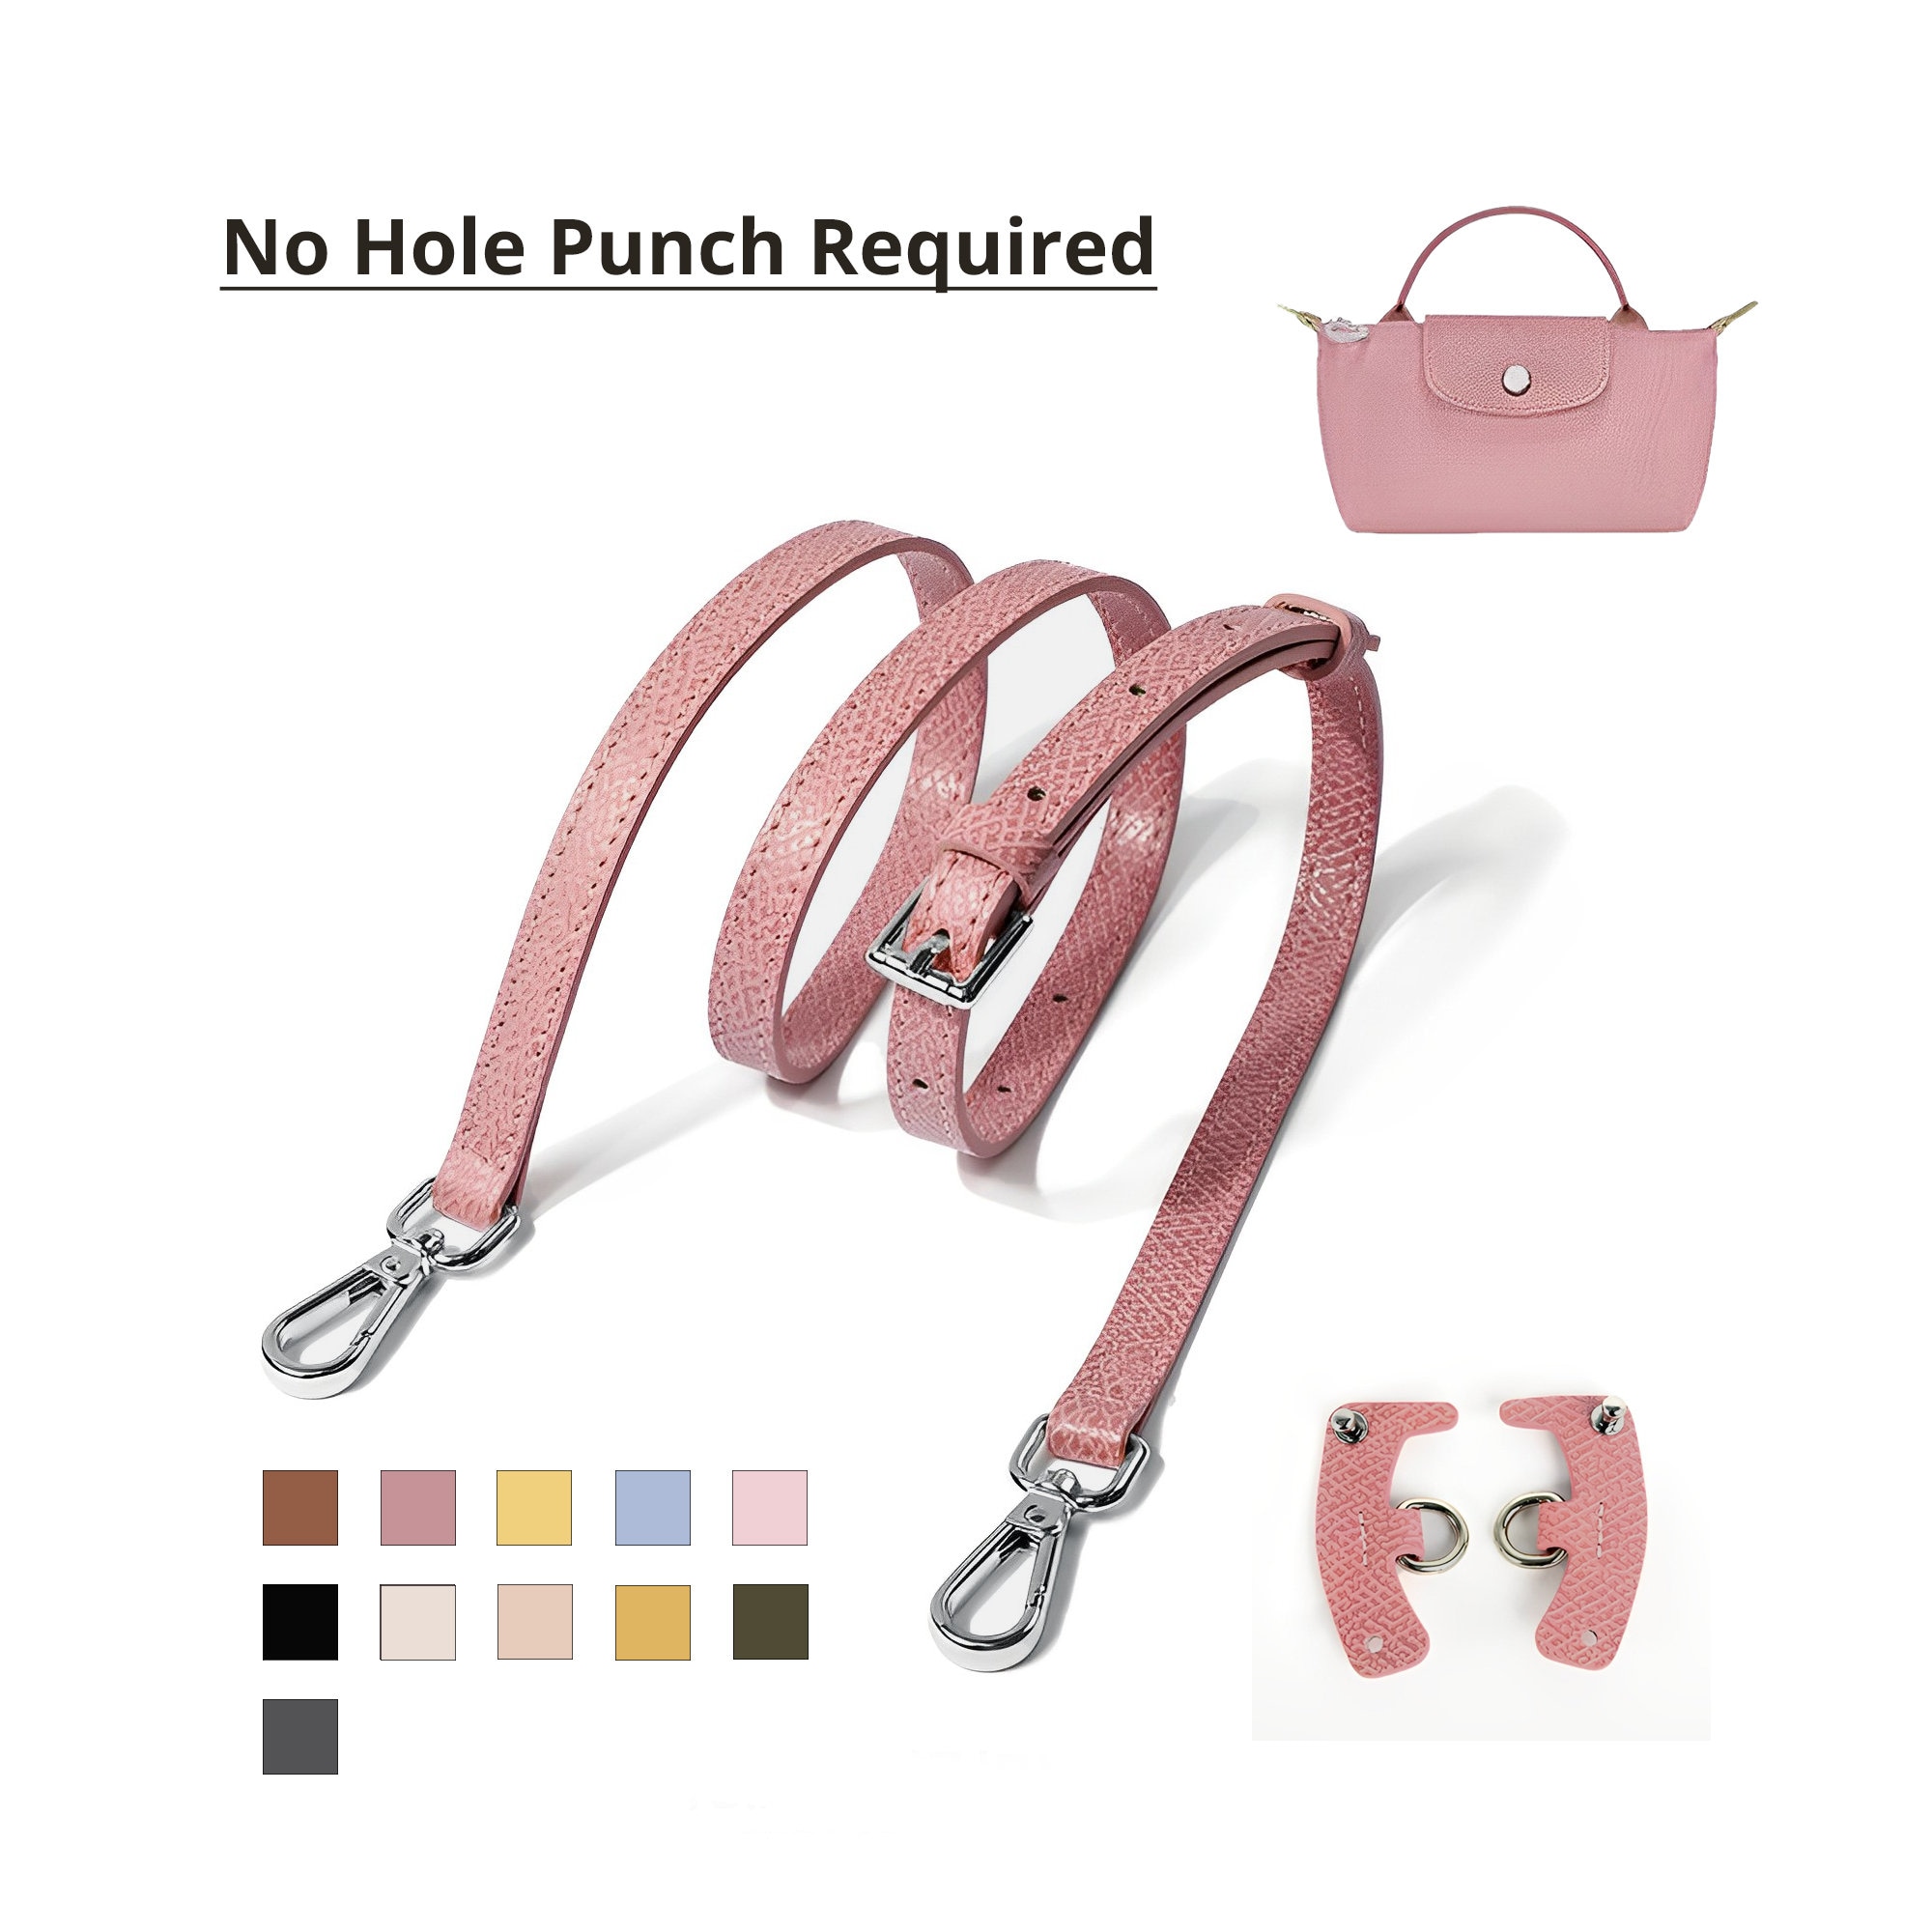 Punch Drunk Handbag Strap